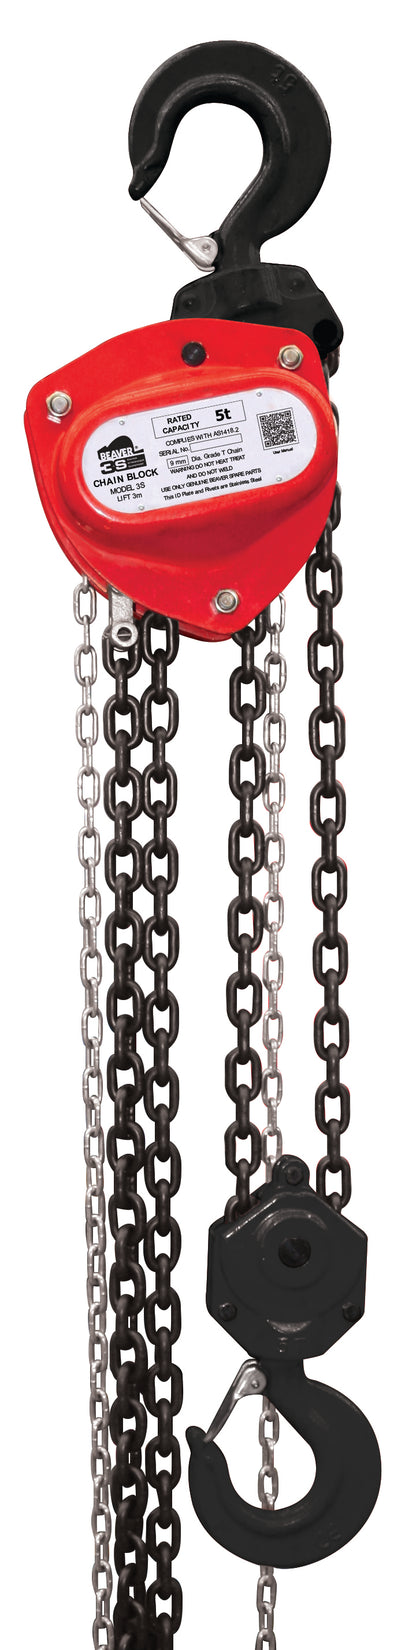 Industrial Manual Chain Block